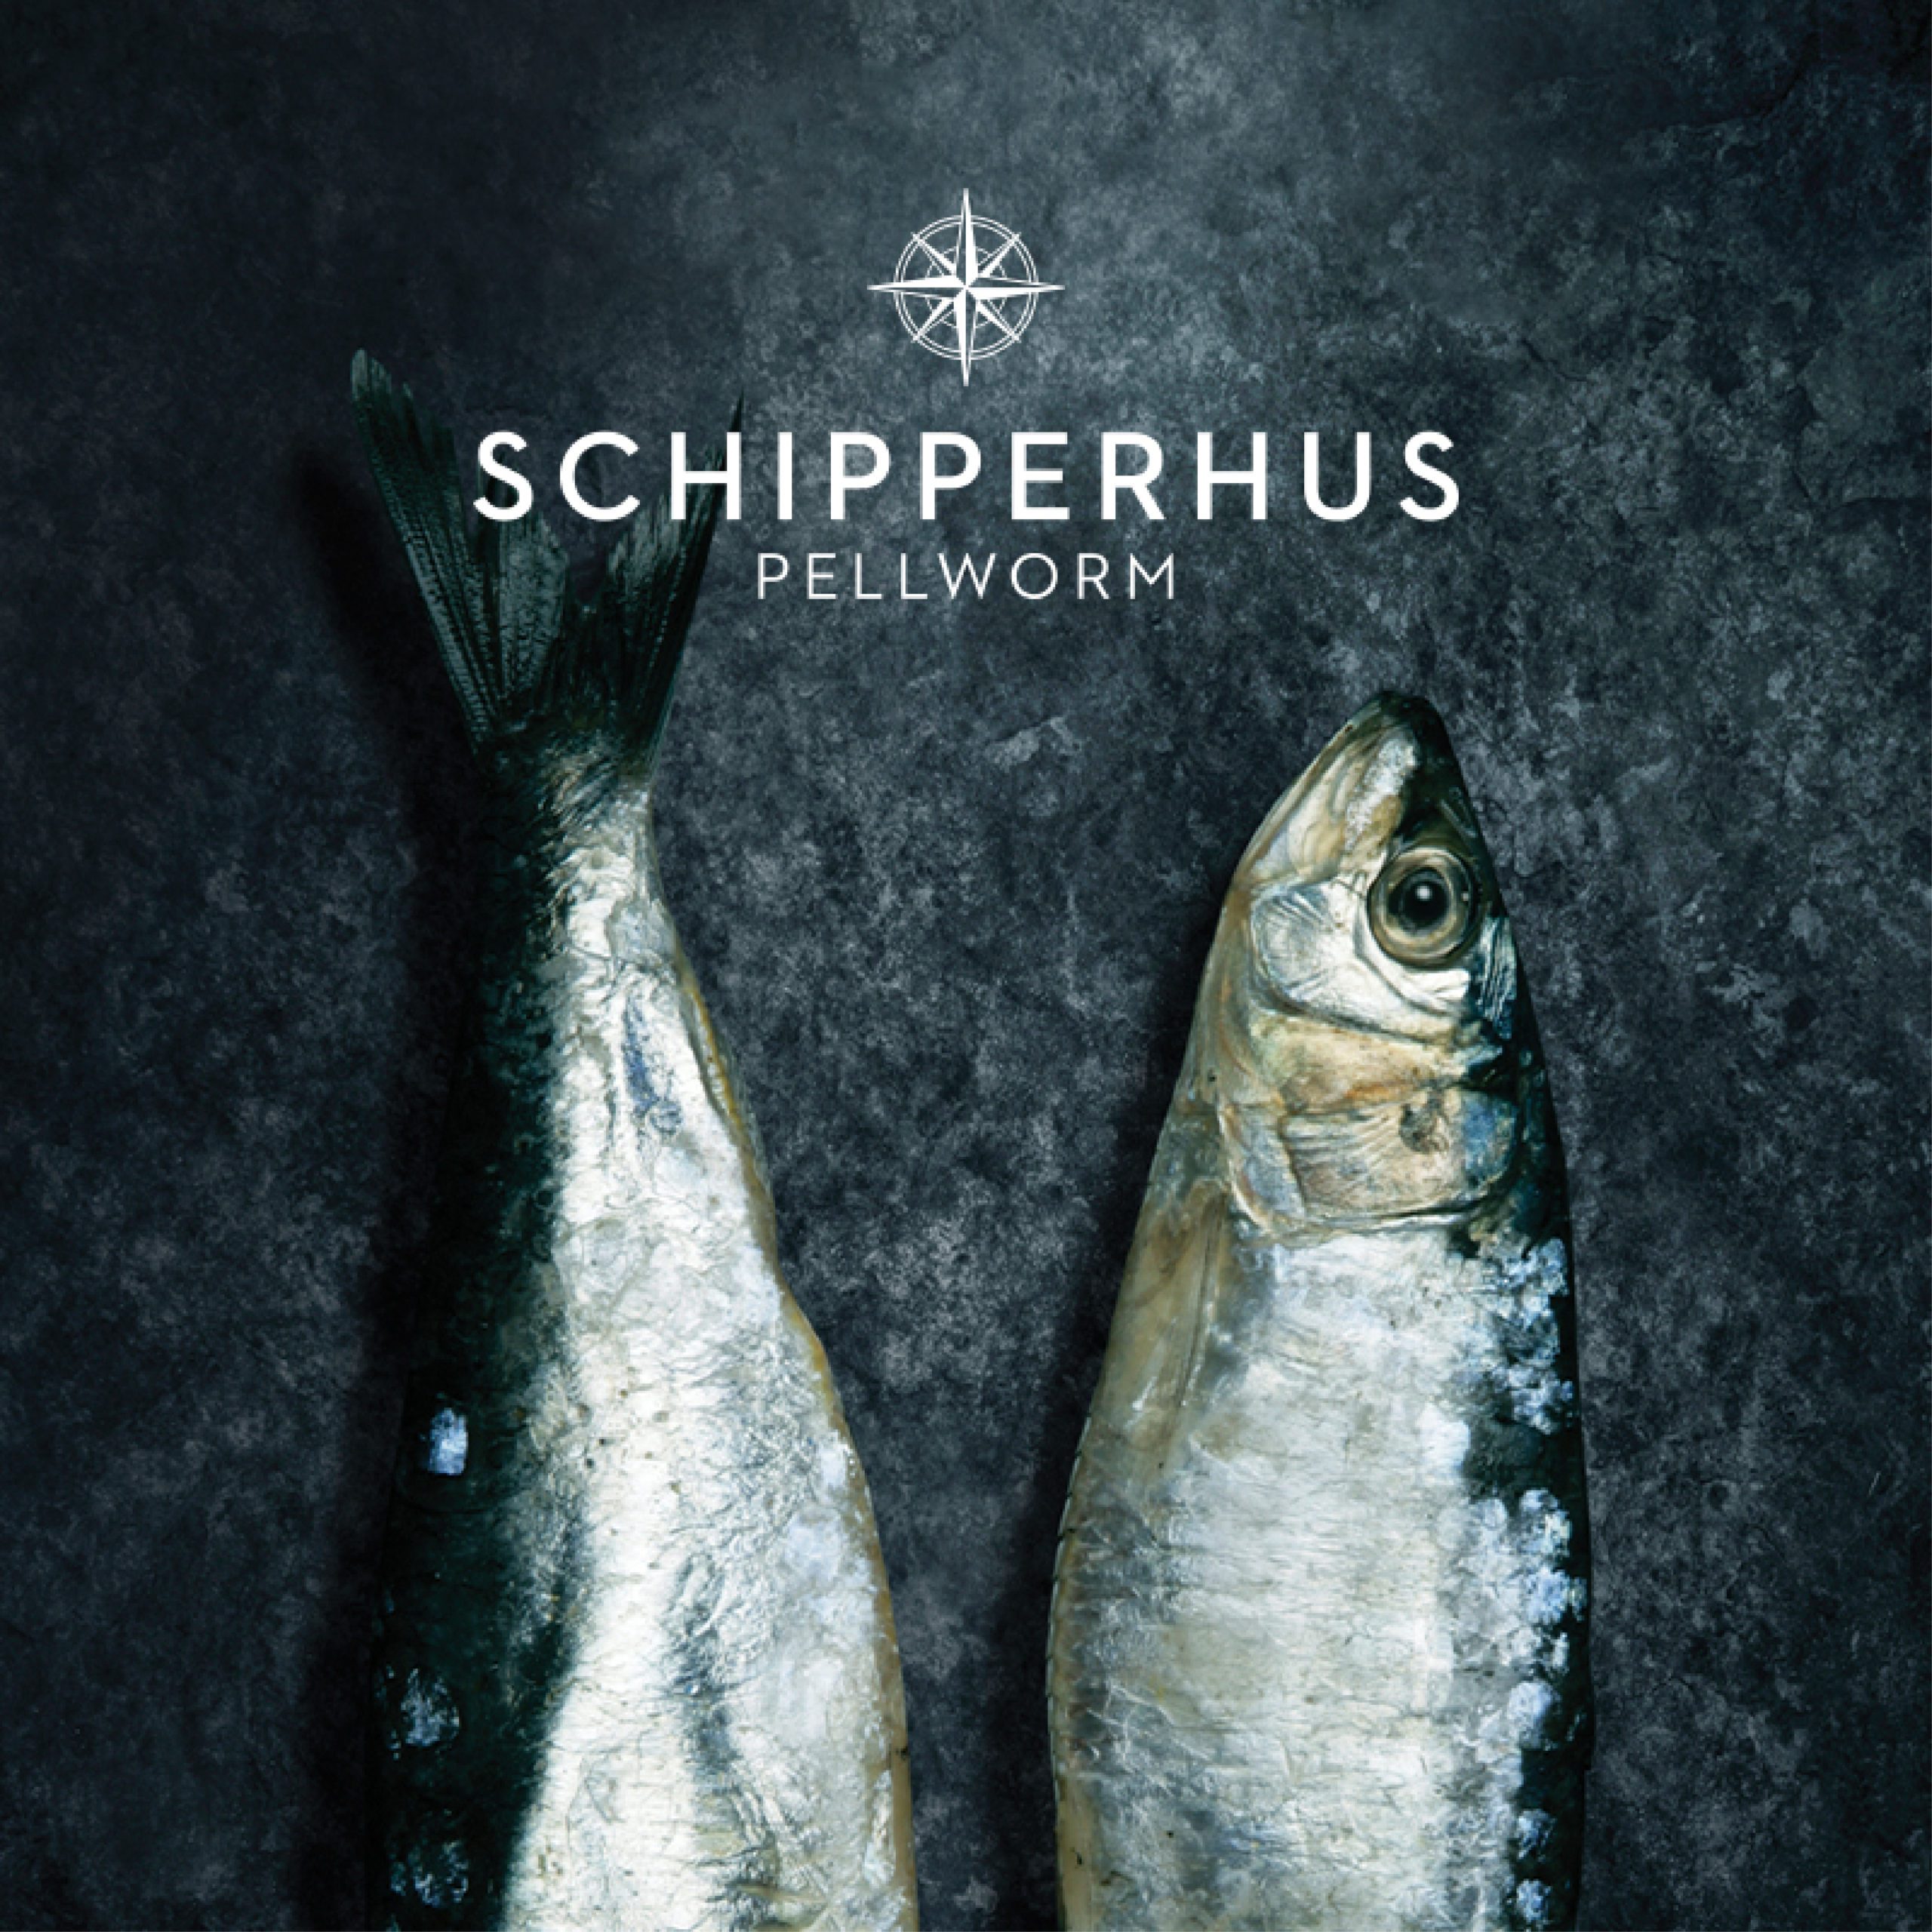 Schipperhus Pellworm white logo overlay image